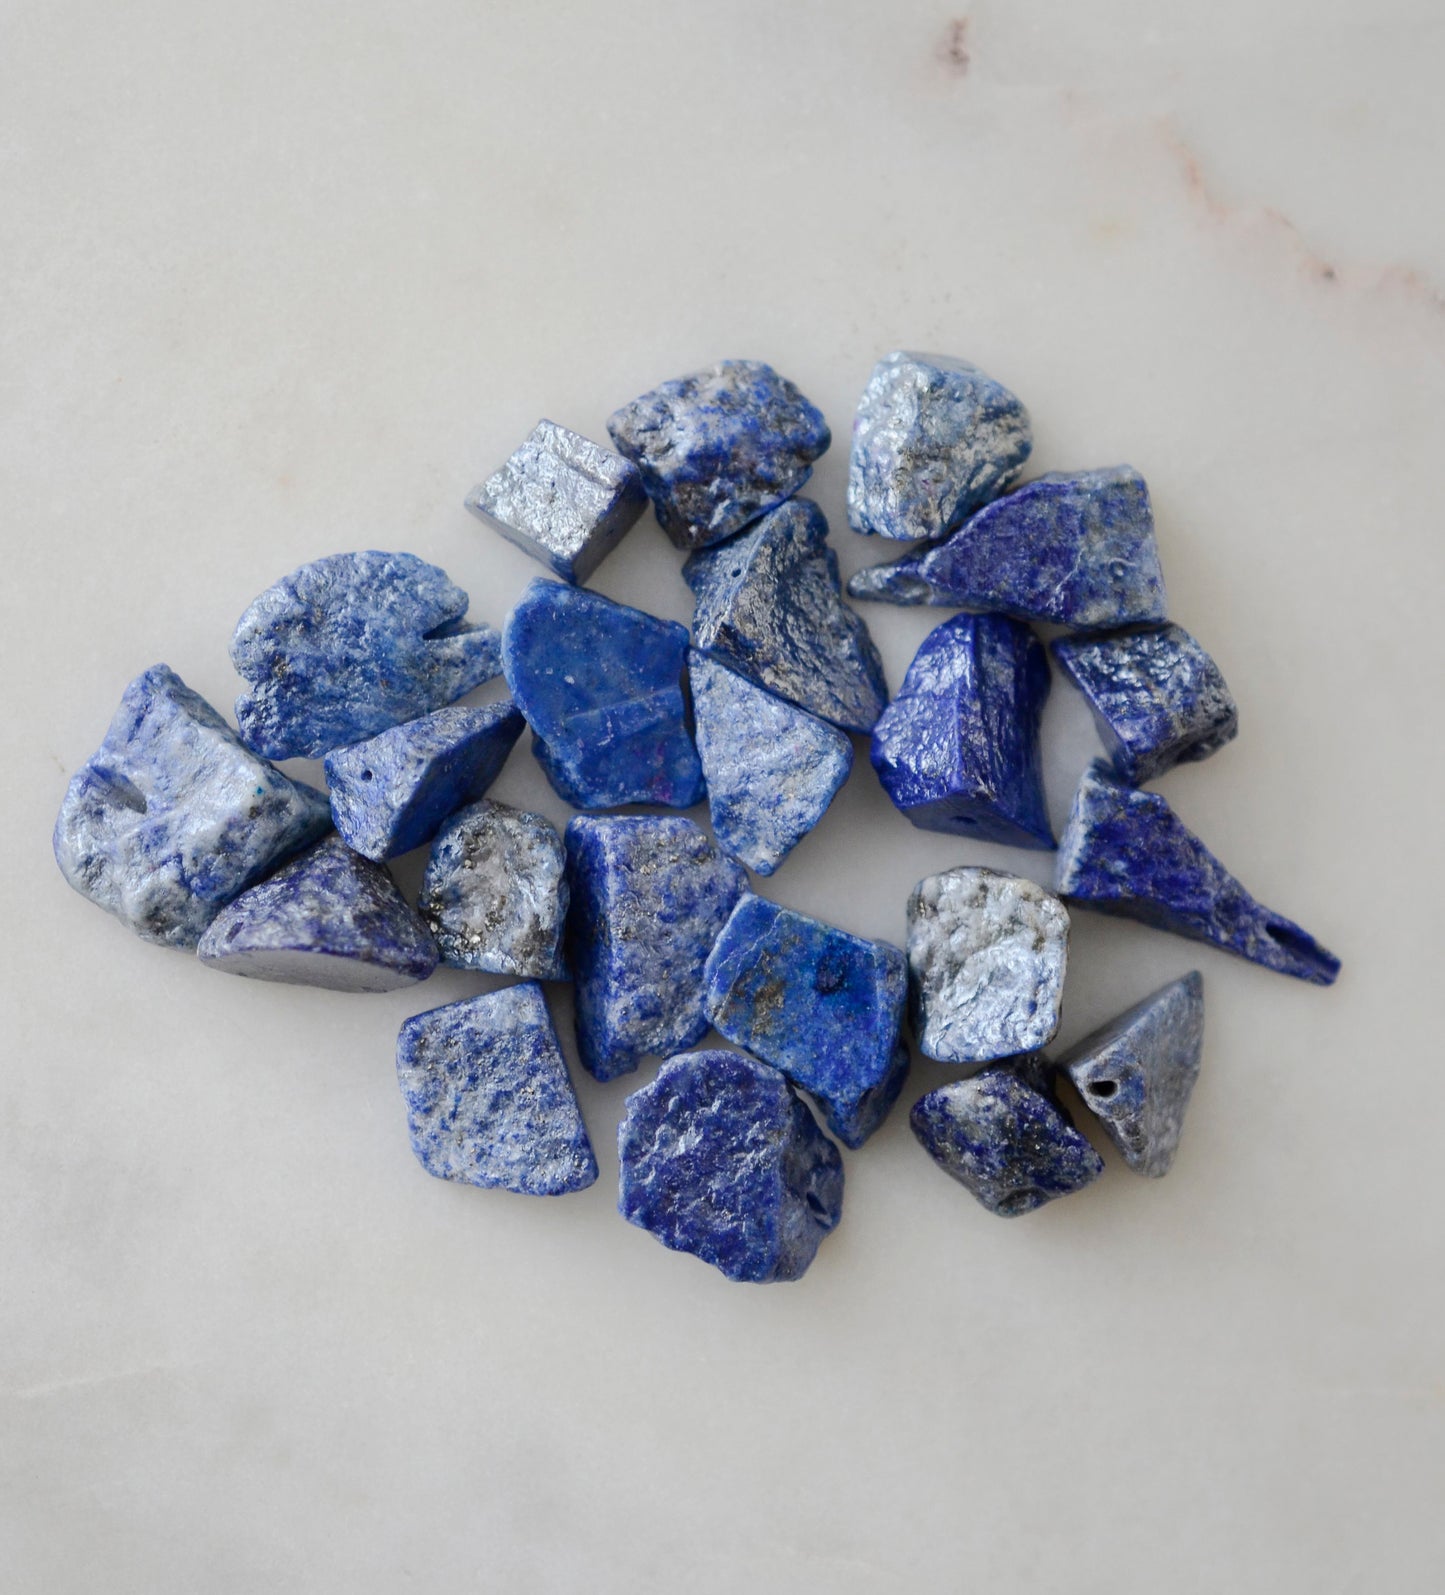 Raw blue lapis lazuli pendant options.